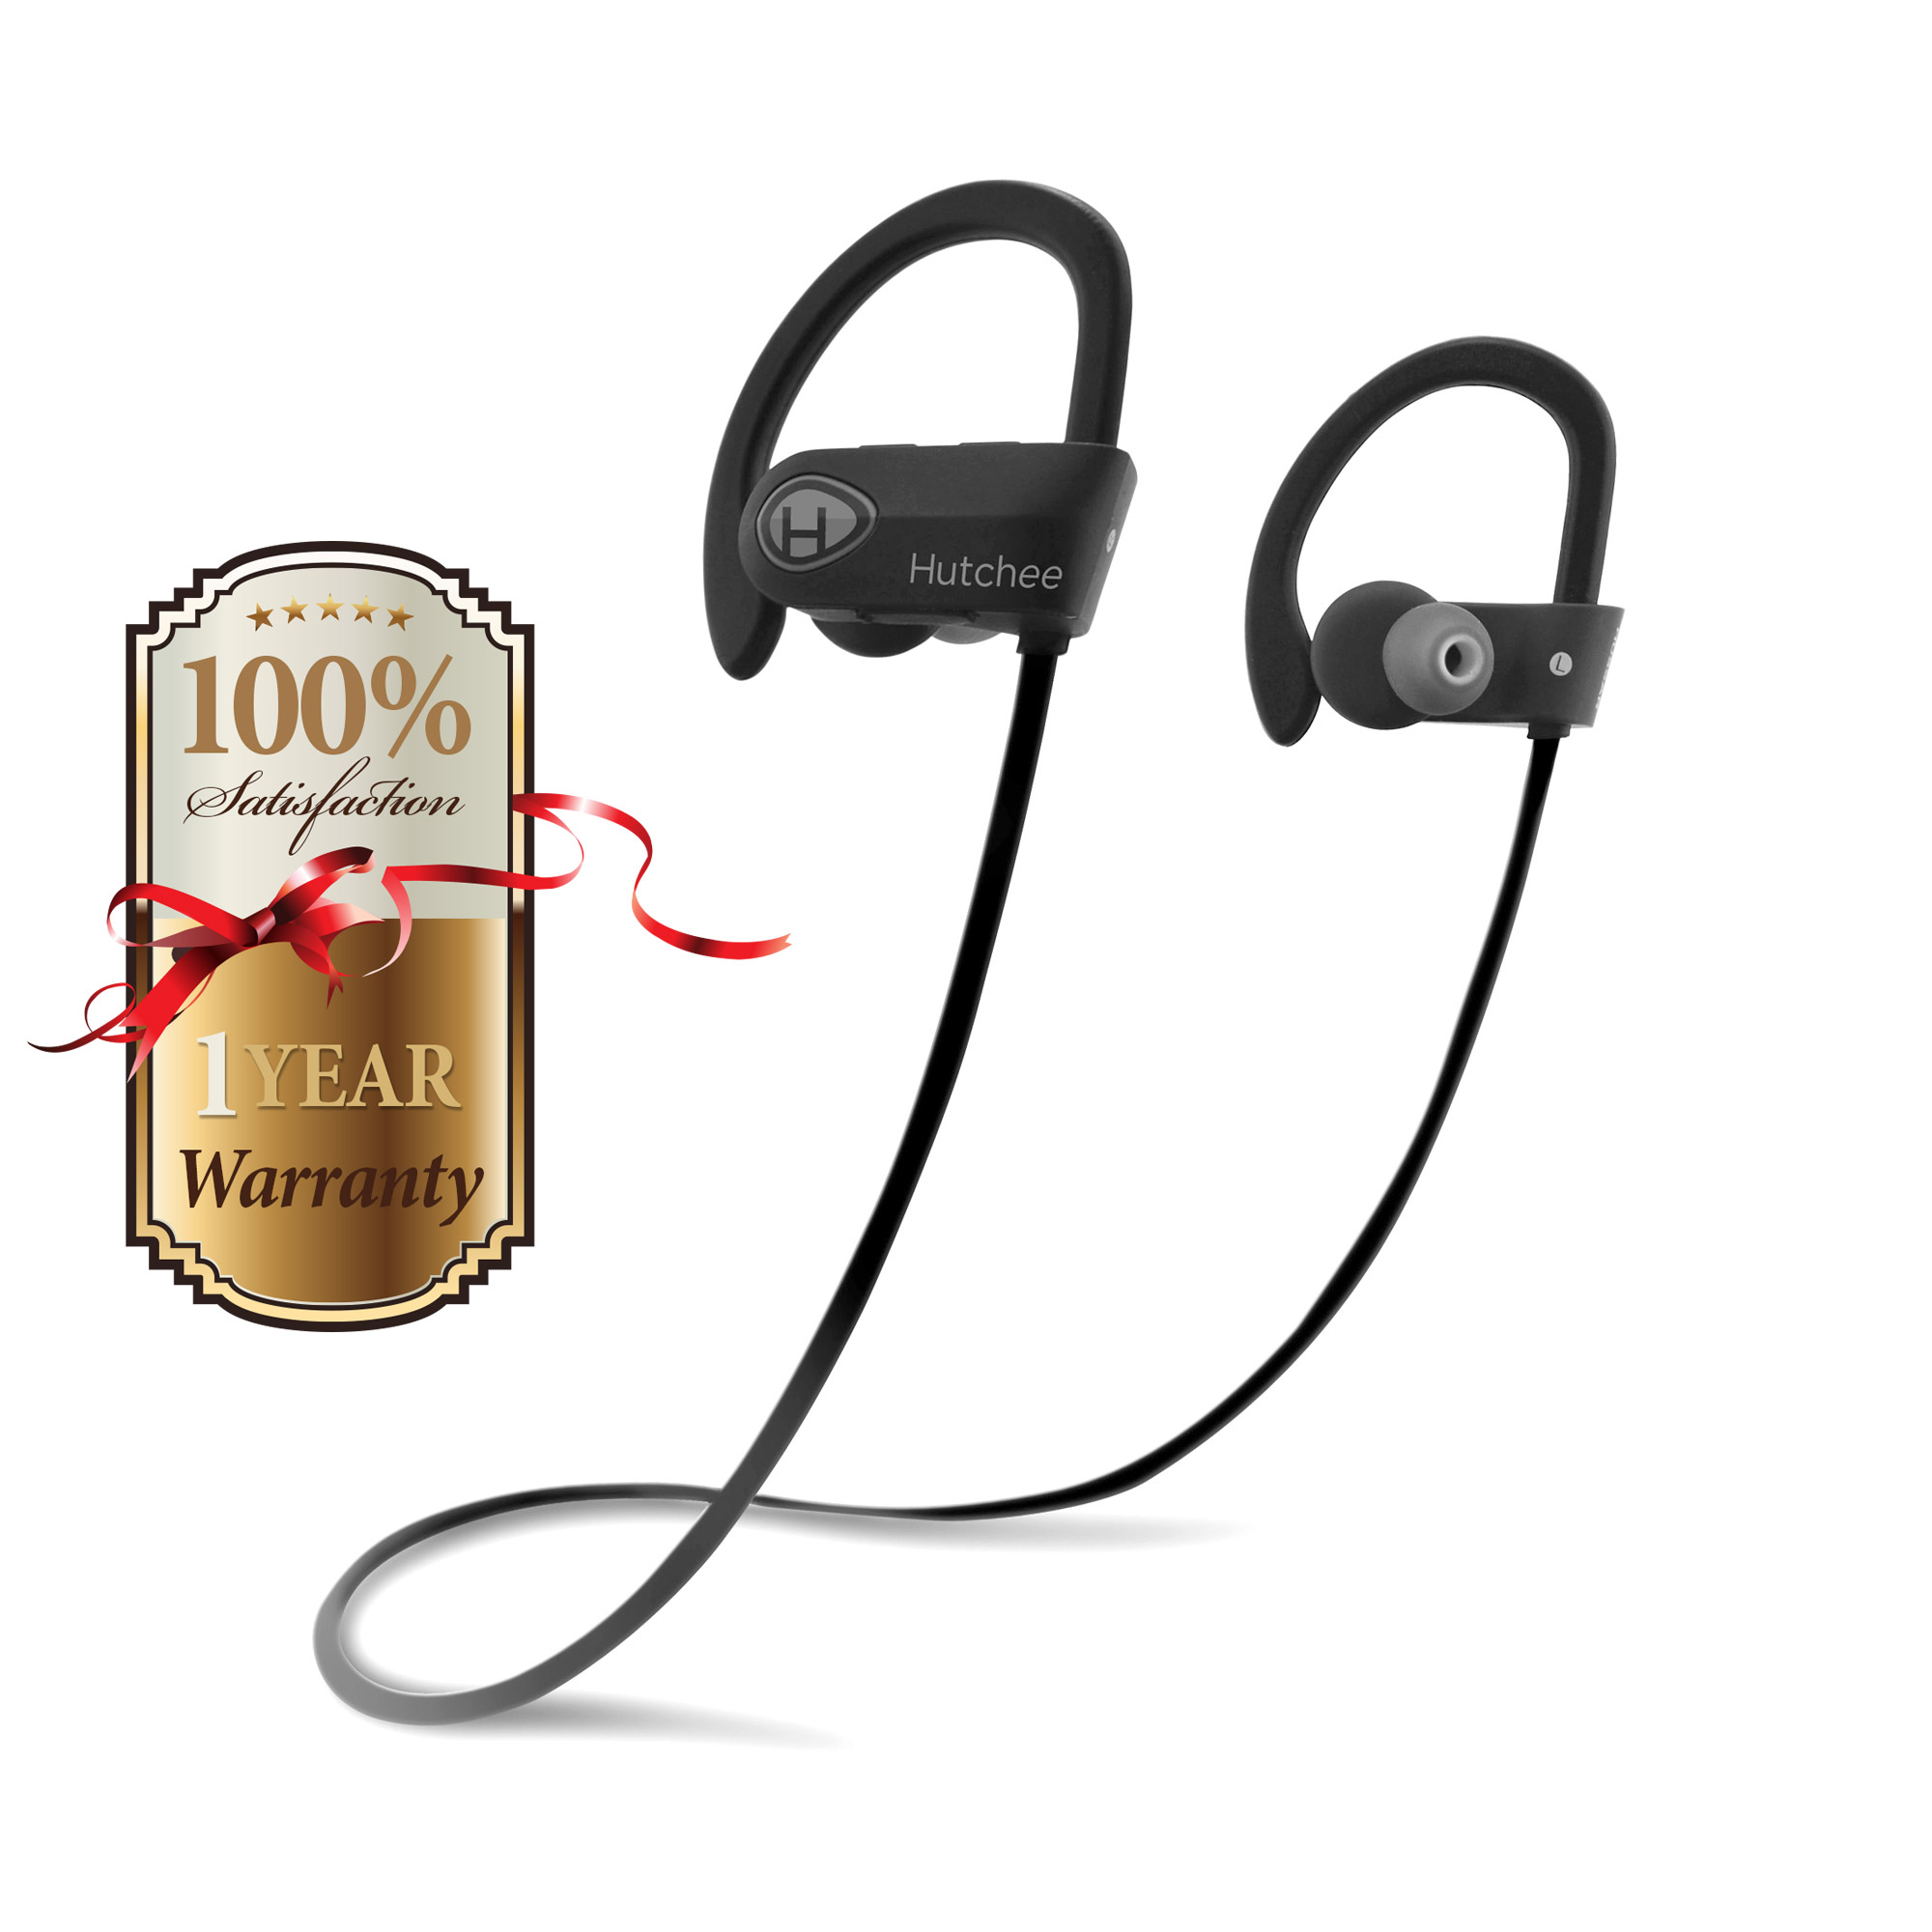 Bluetooth Headphones - 1 Year Warranty